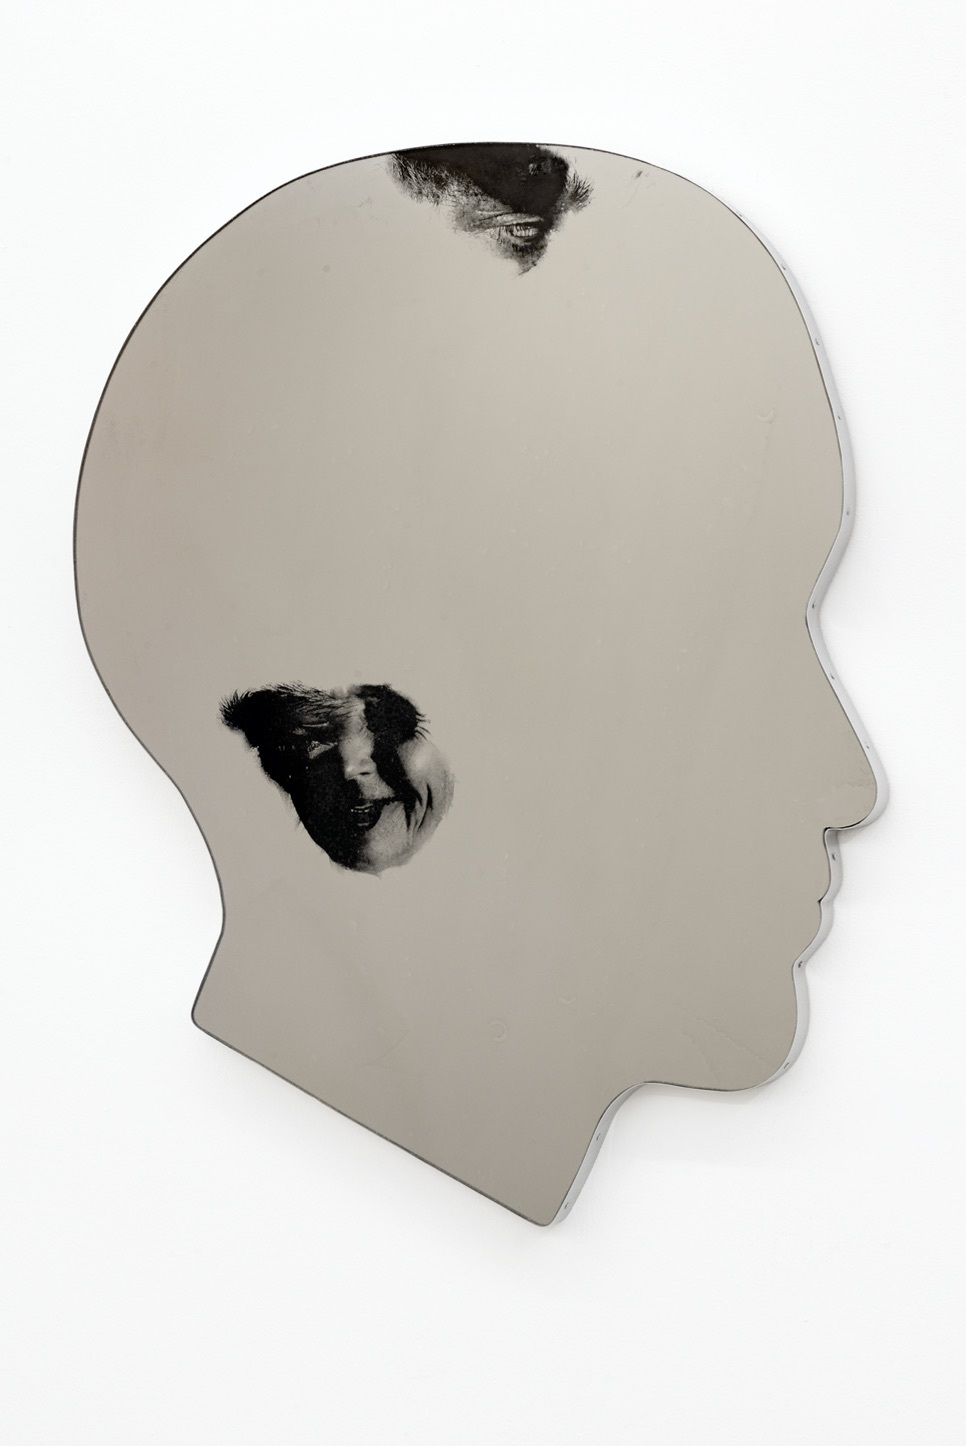 Robert Brambora,‘Ines’, 2021, laser engraving behind glass, lacquer, stainless steel, 68 x 56 cm